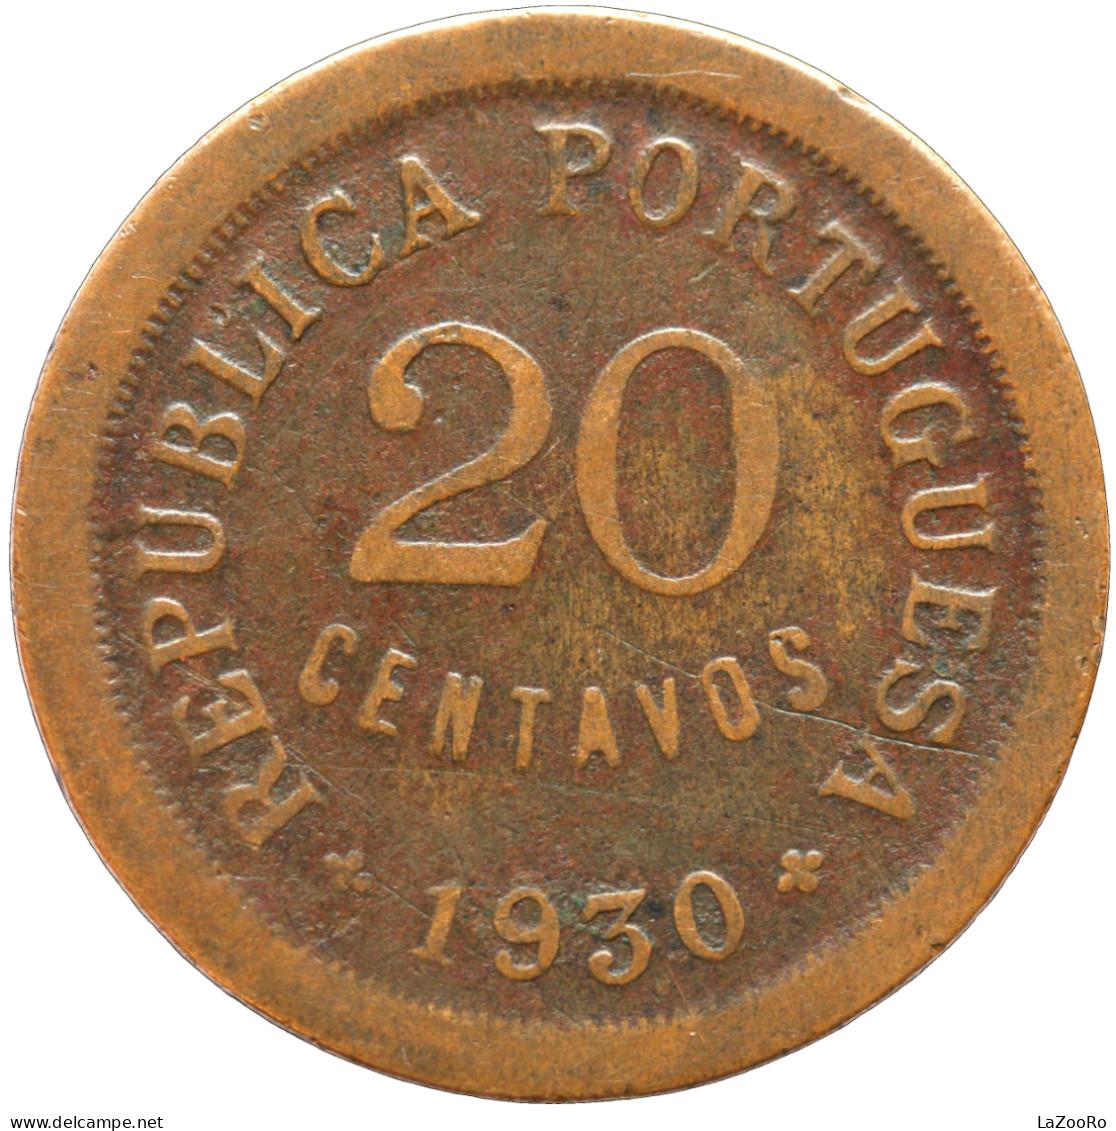 LaZooRo: Portuguese Cape Verde 20 Centavos 1930 VF - Kaapverdische Eilanden